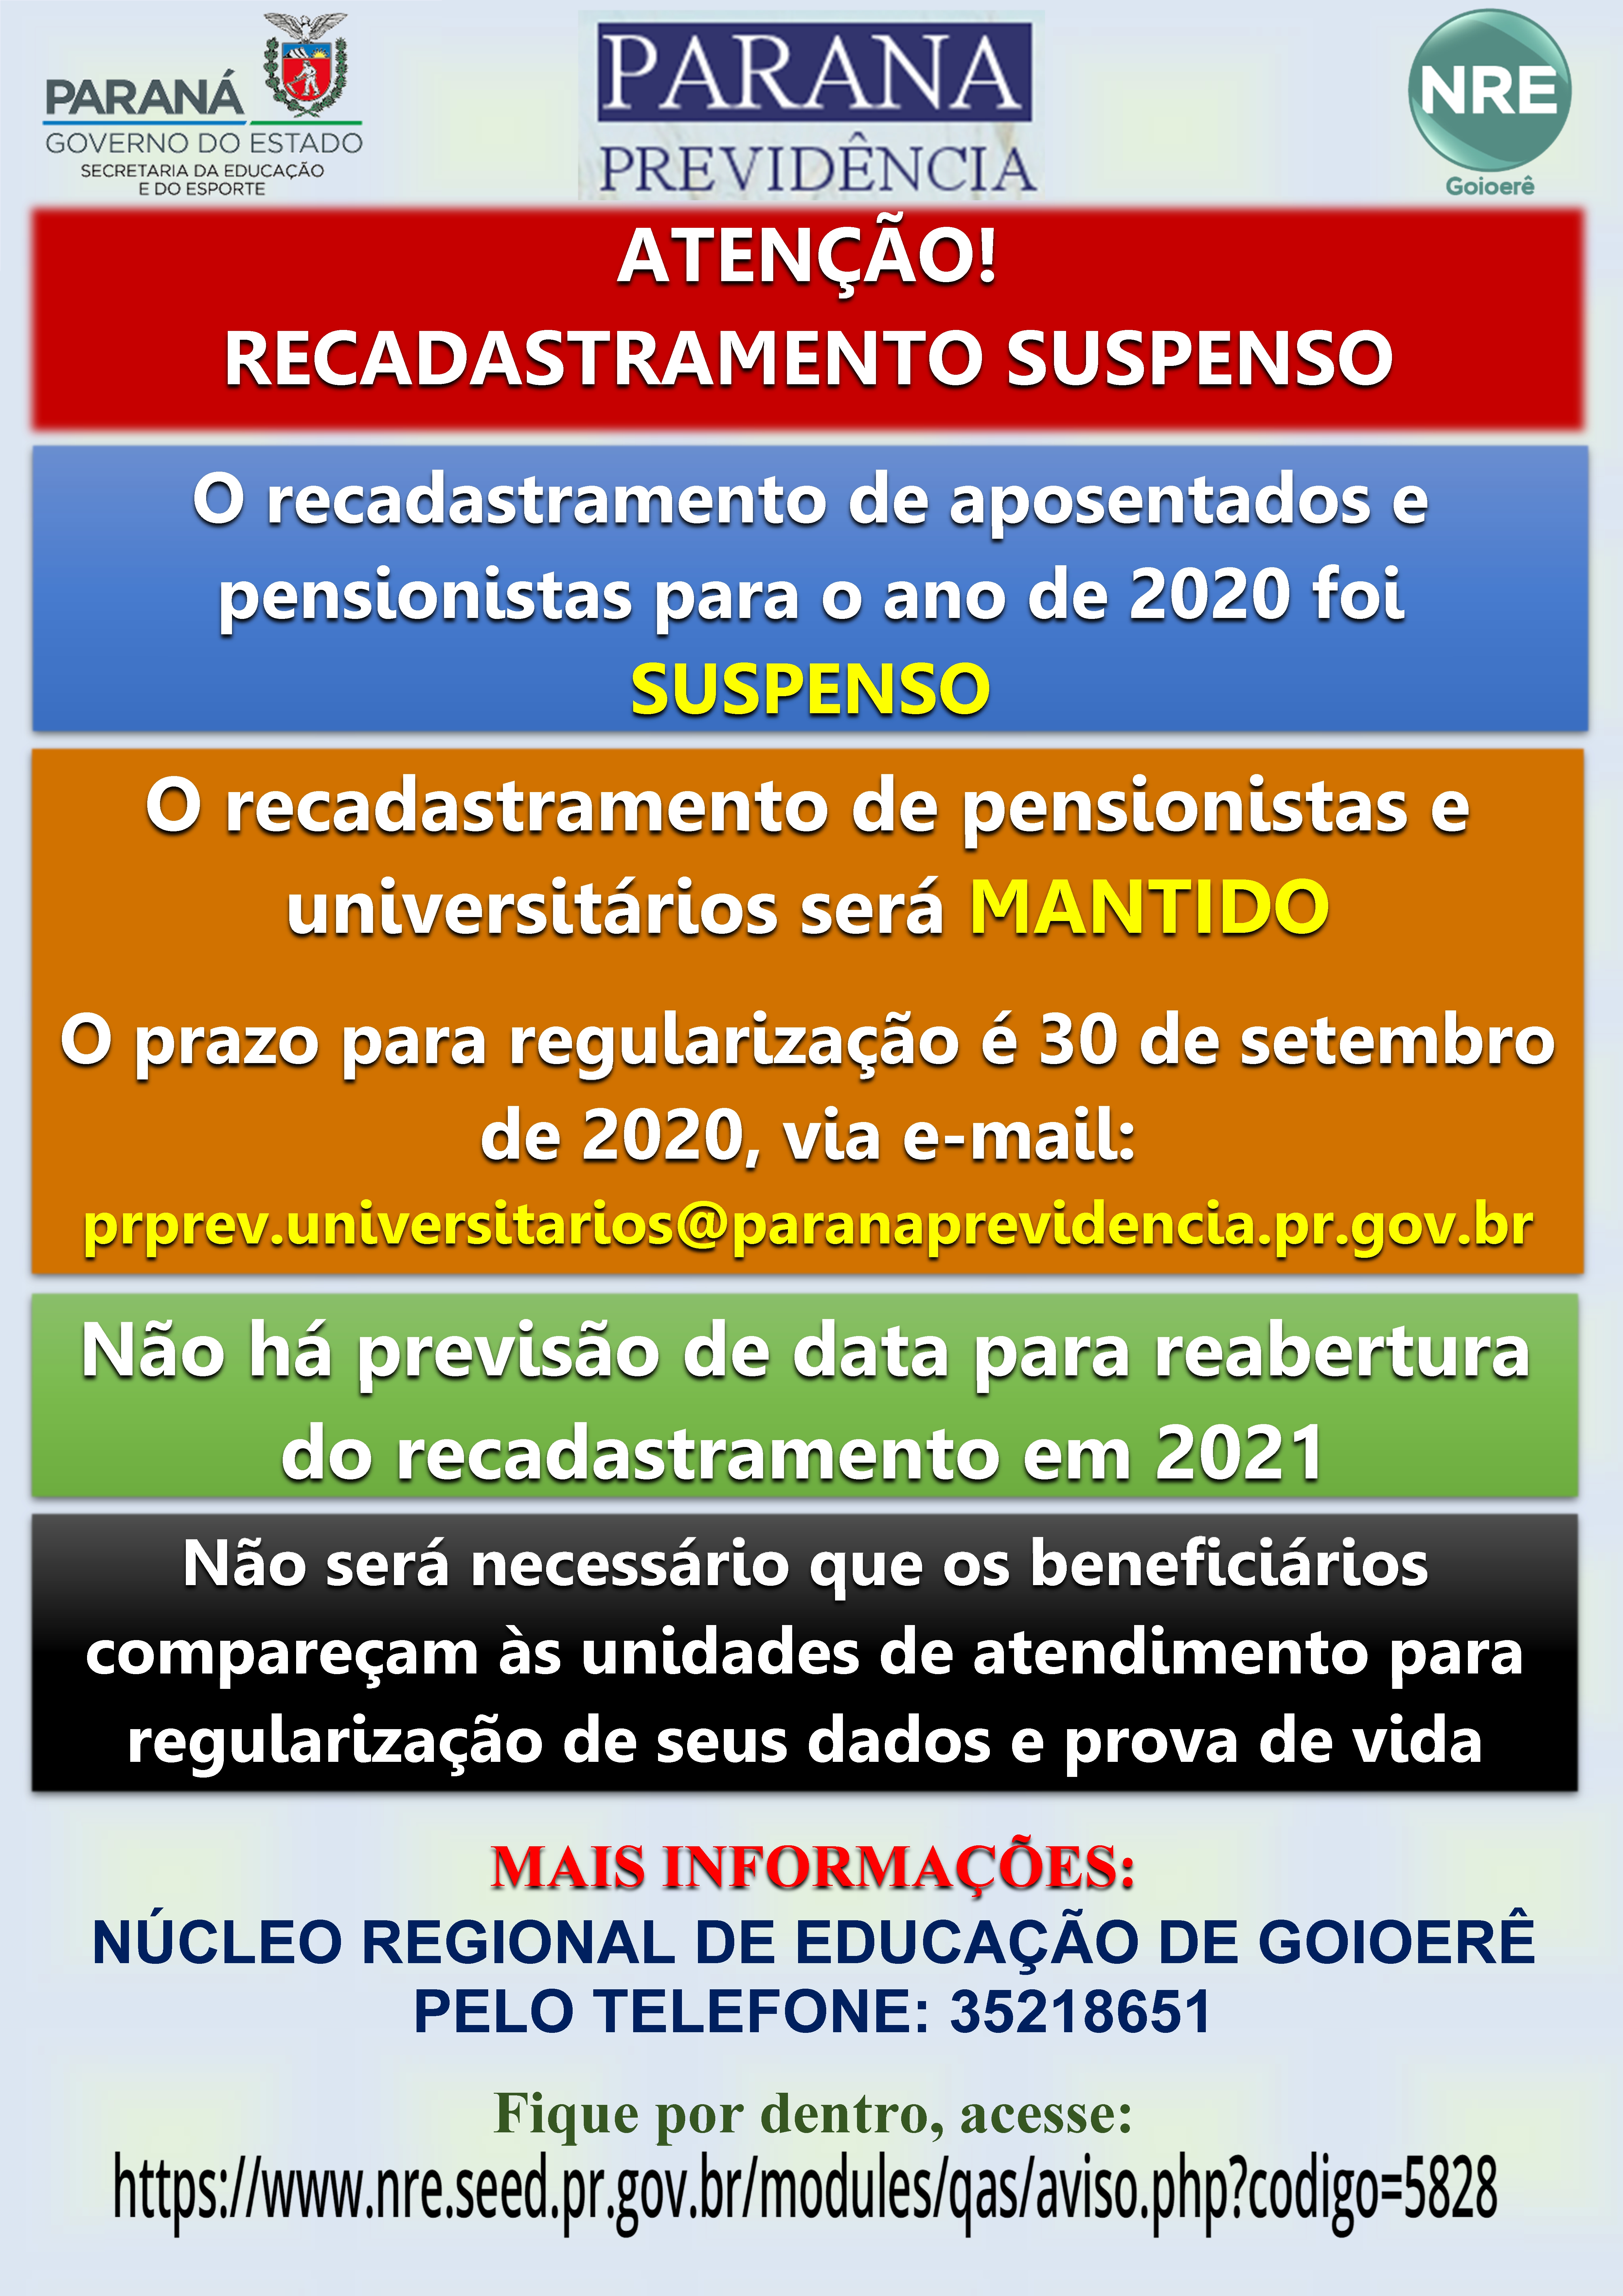 https://www.nre.seed.pr.gov.br/modules/qas/uploads/5828/microsoft_word__parana_previdencia.jpg